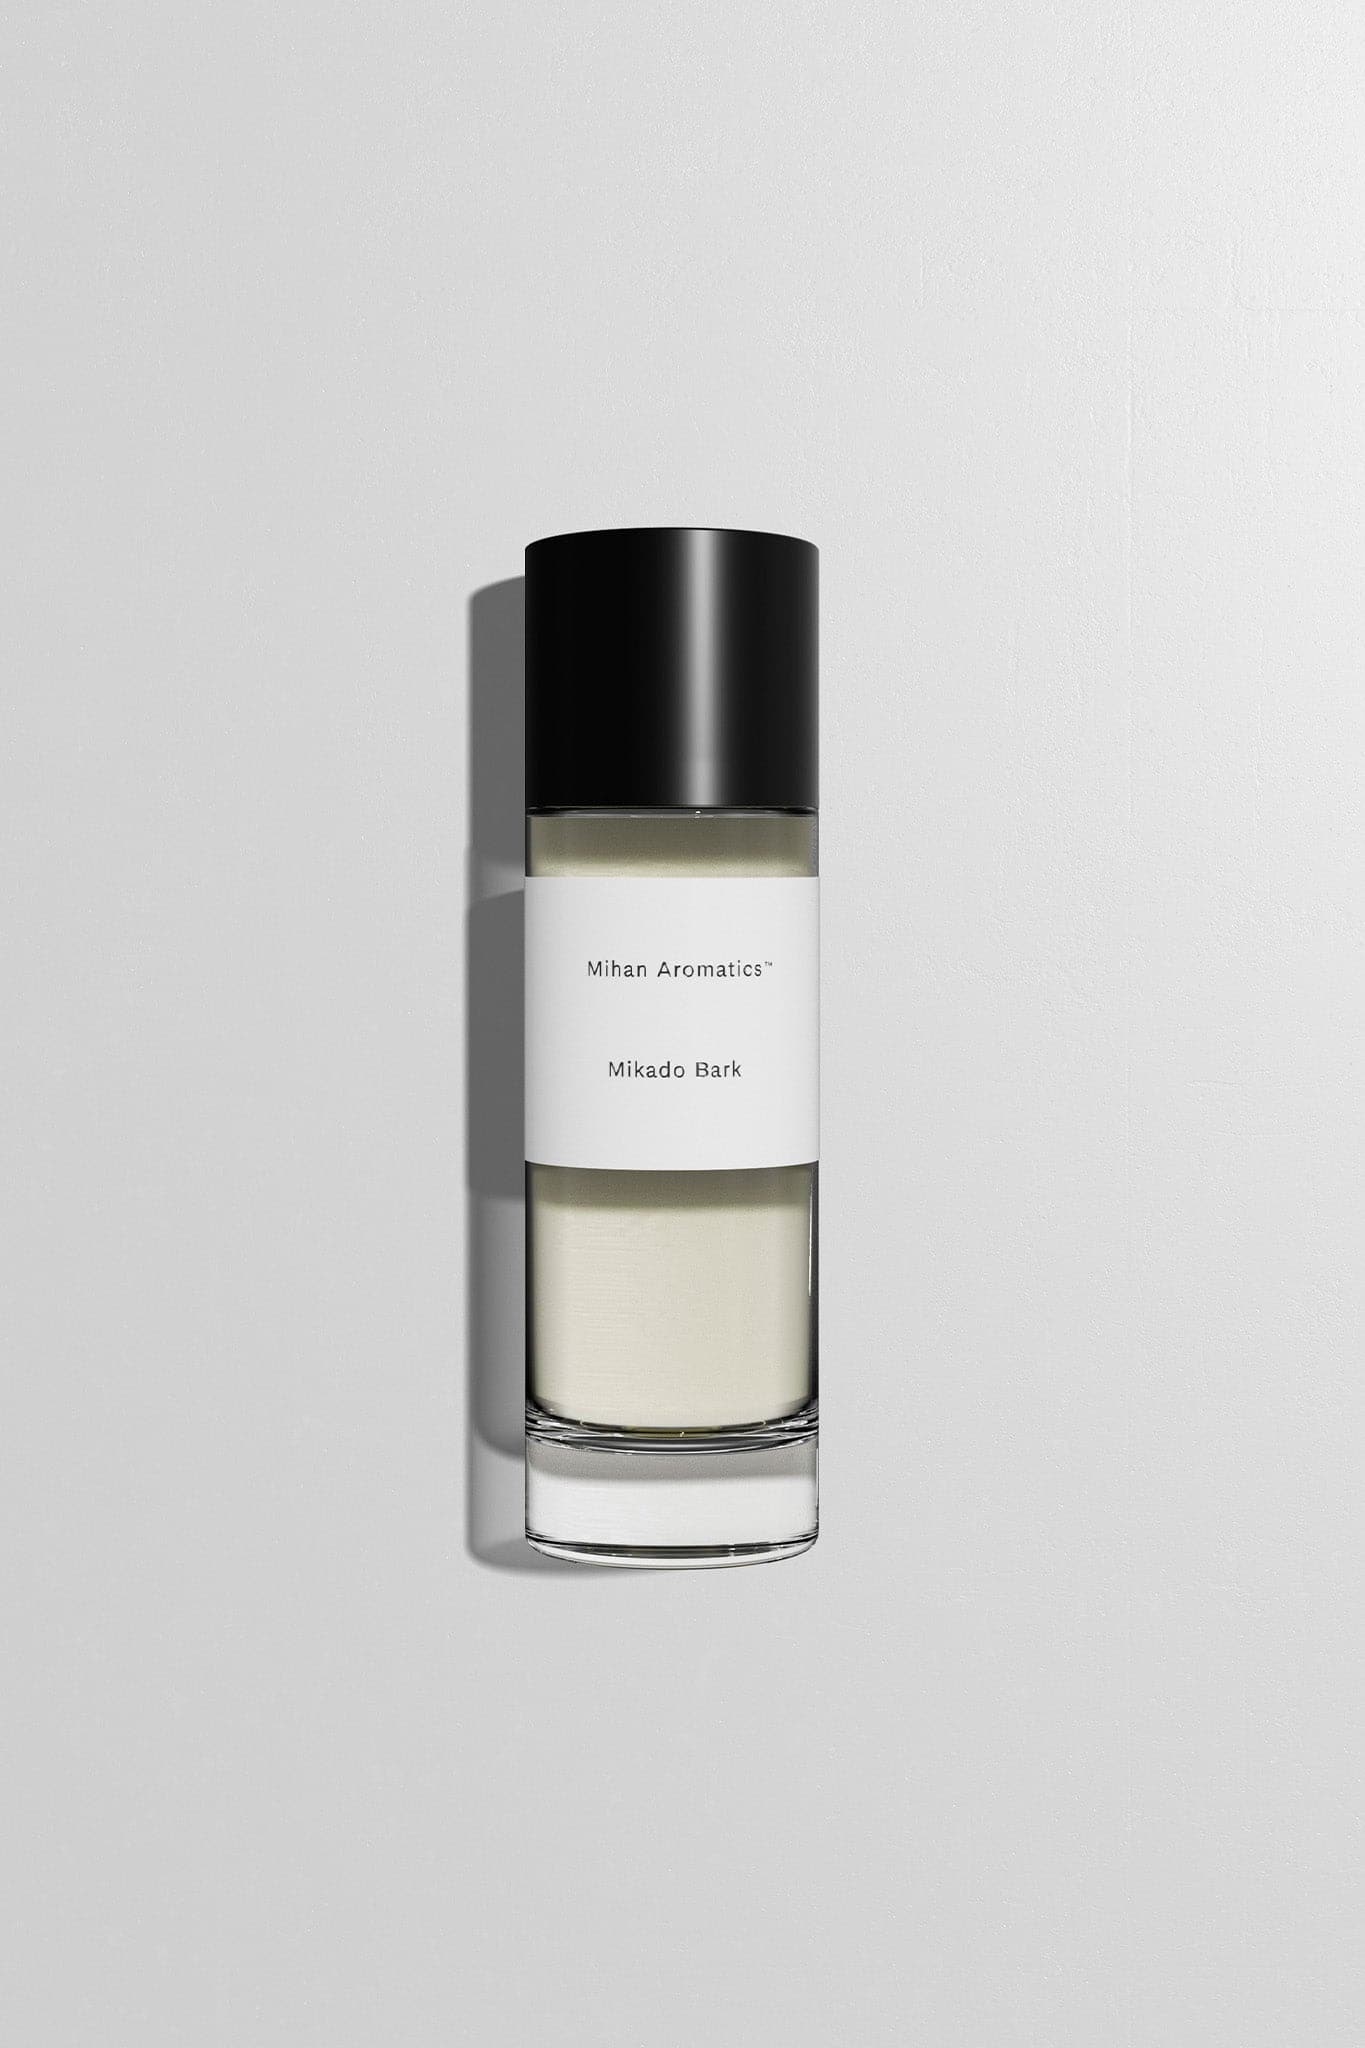 Mihan Aromatics - Mikado Bark Parfum - Marz Designs AUMihan Aromatics